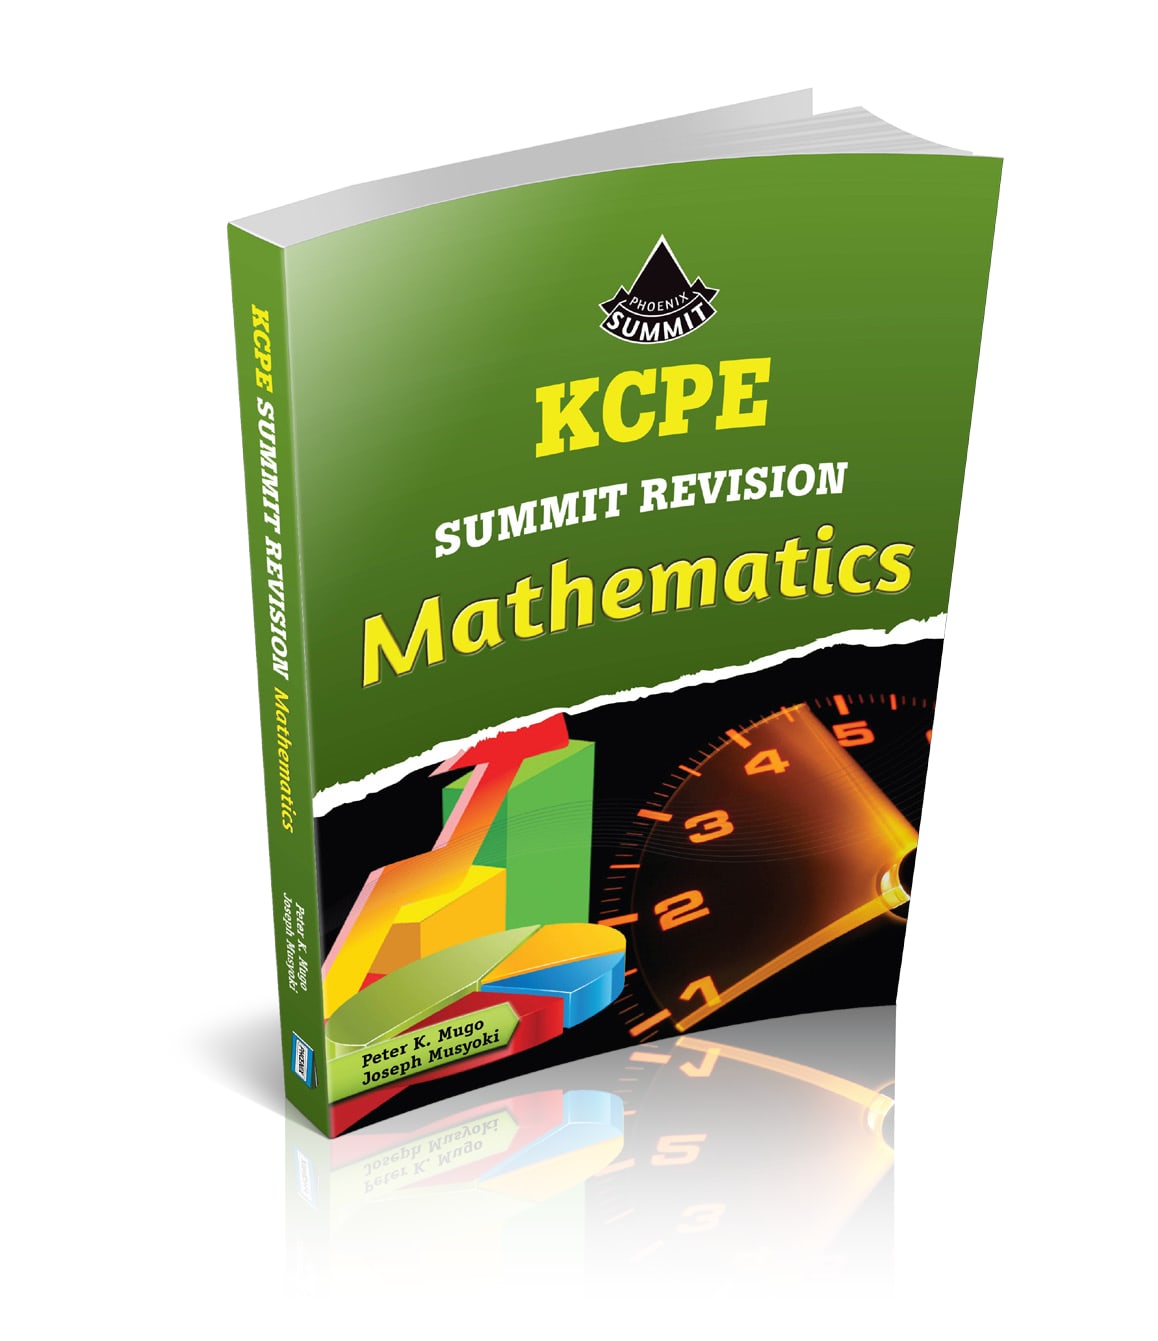 KCPE Summit Revision Mathematics